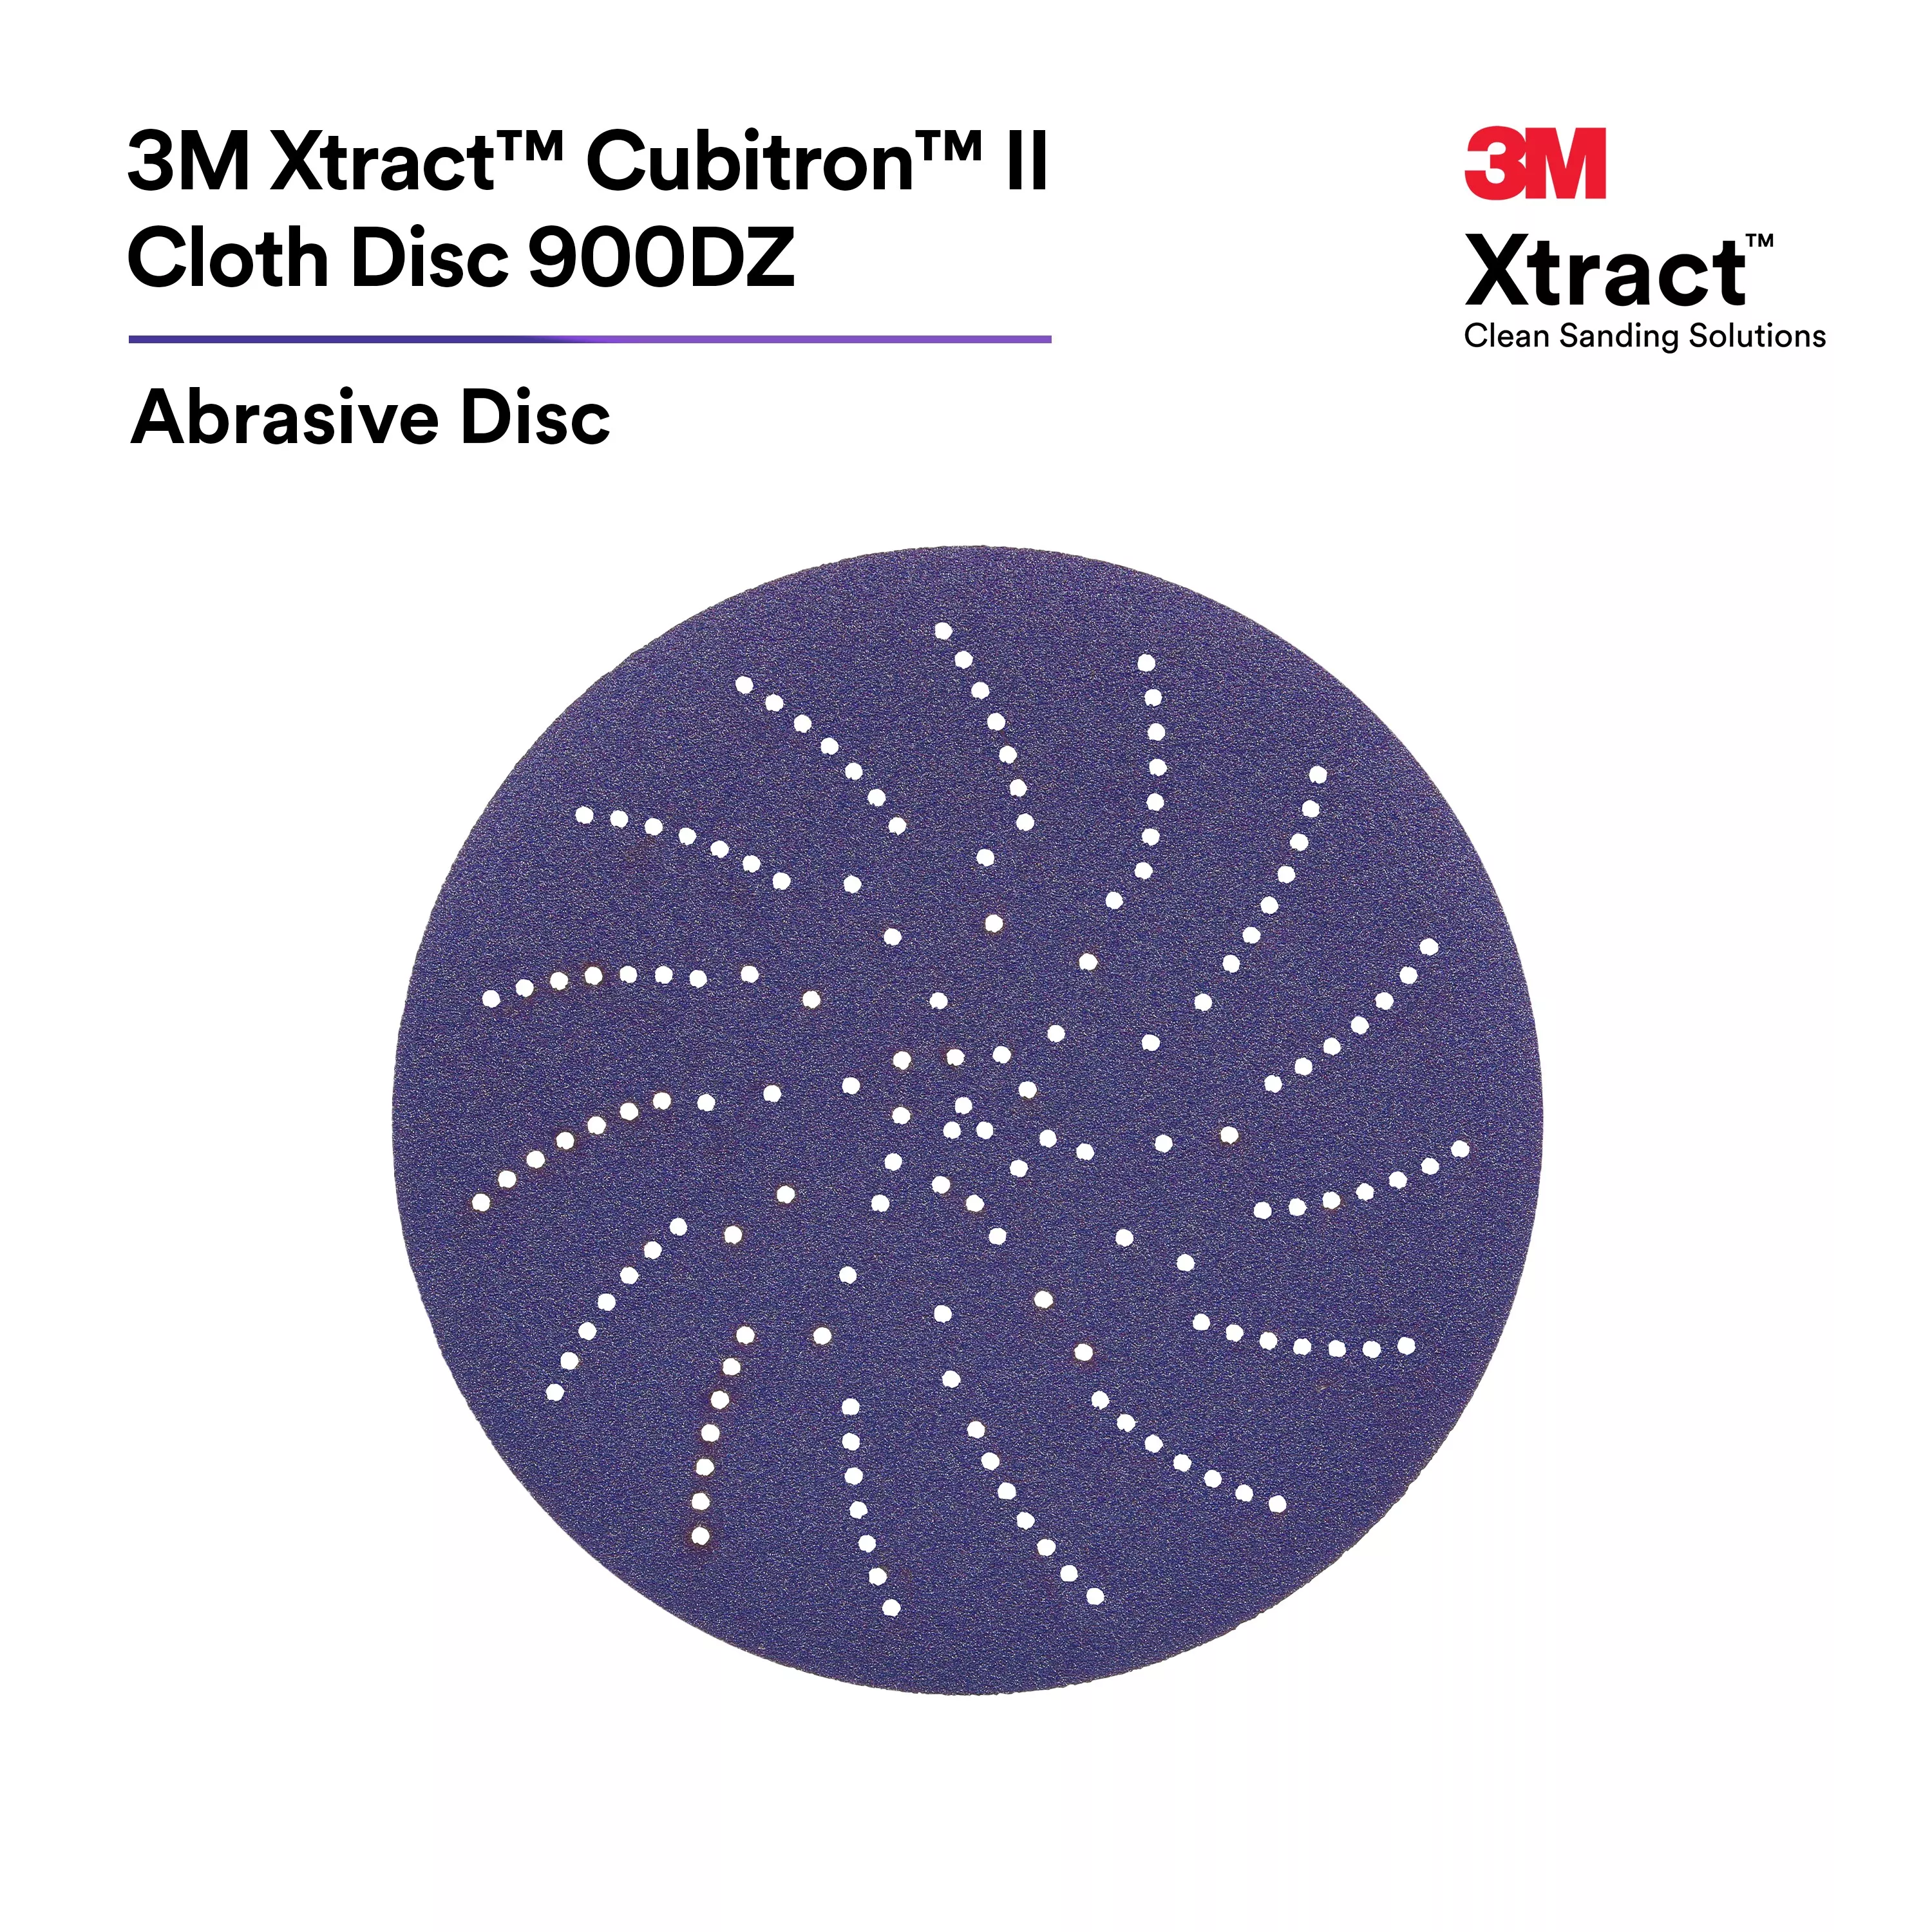 Product Number 900DZ | 3M Xtract™ Cubitron™ II Cloth Disc 900DZ